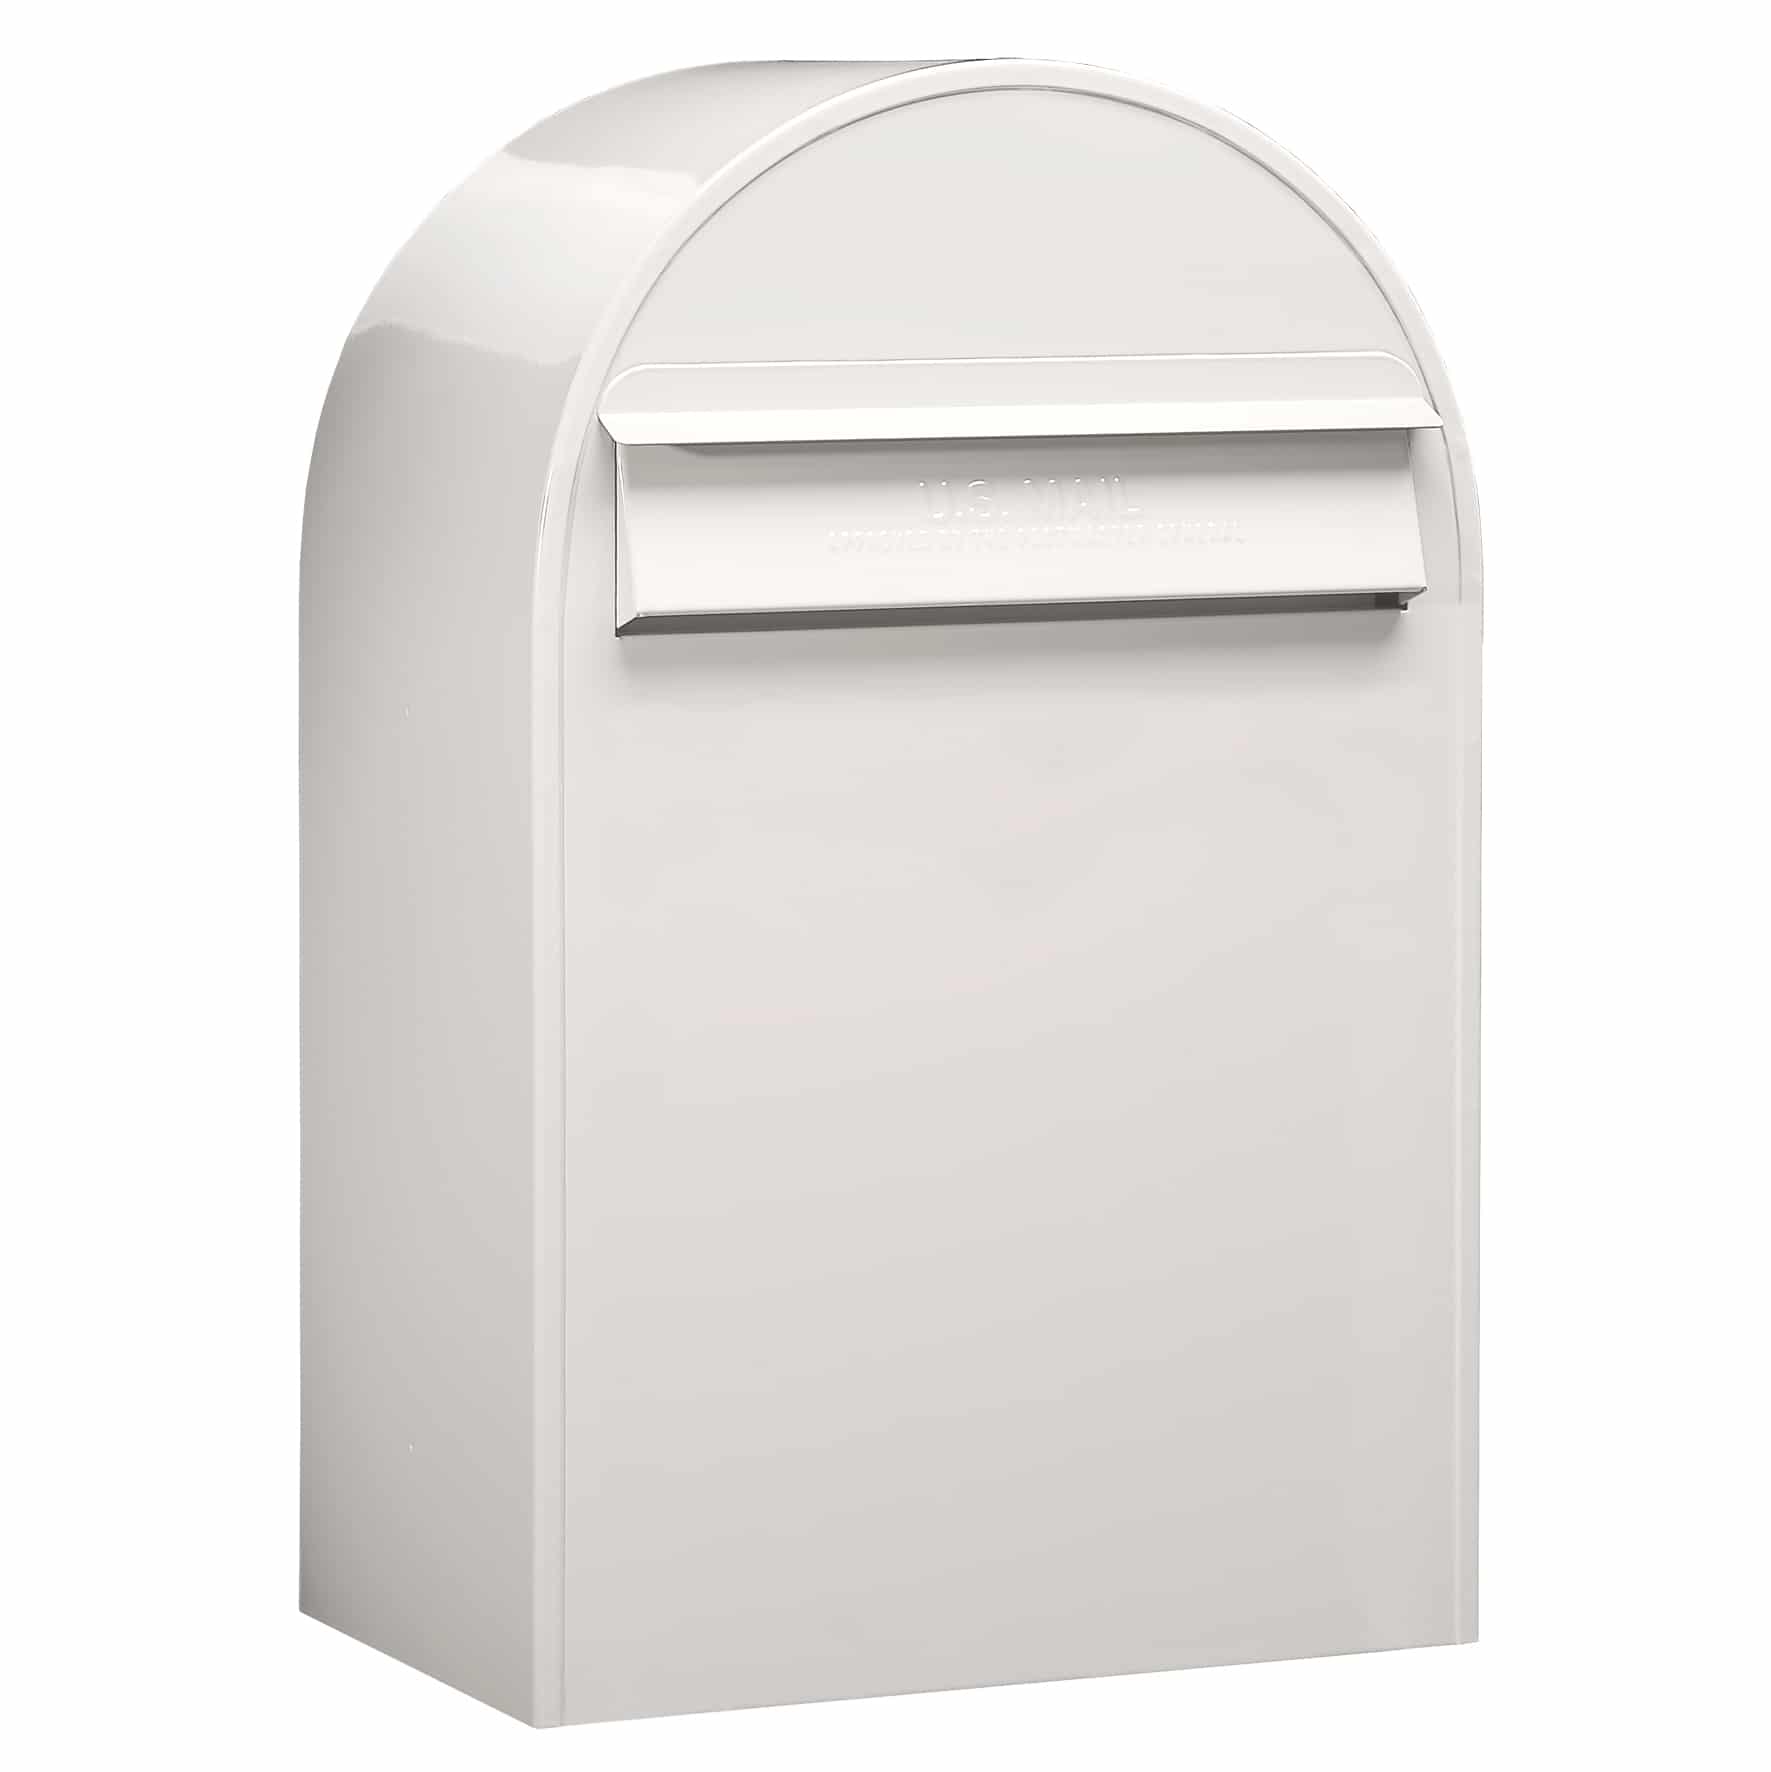 SALE! – Bobi Classic Rear Access Wall Mount Mailbox Product Image